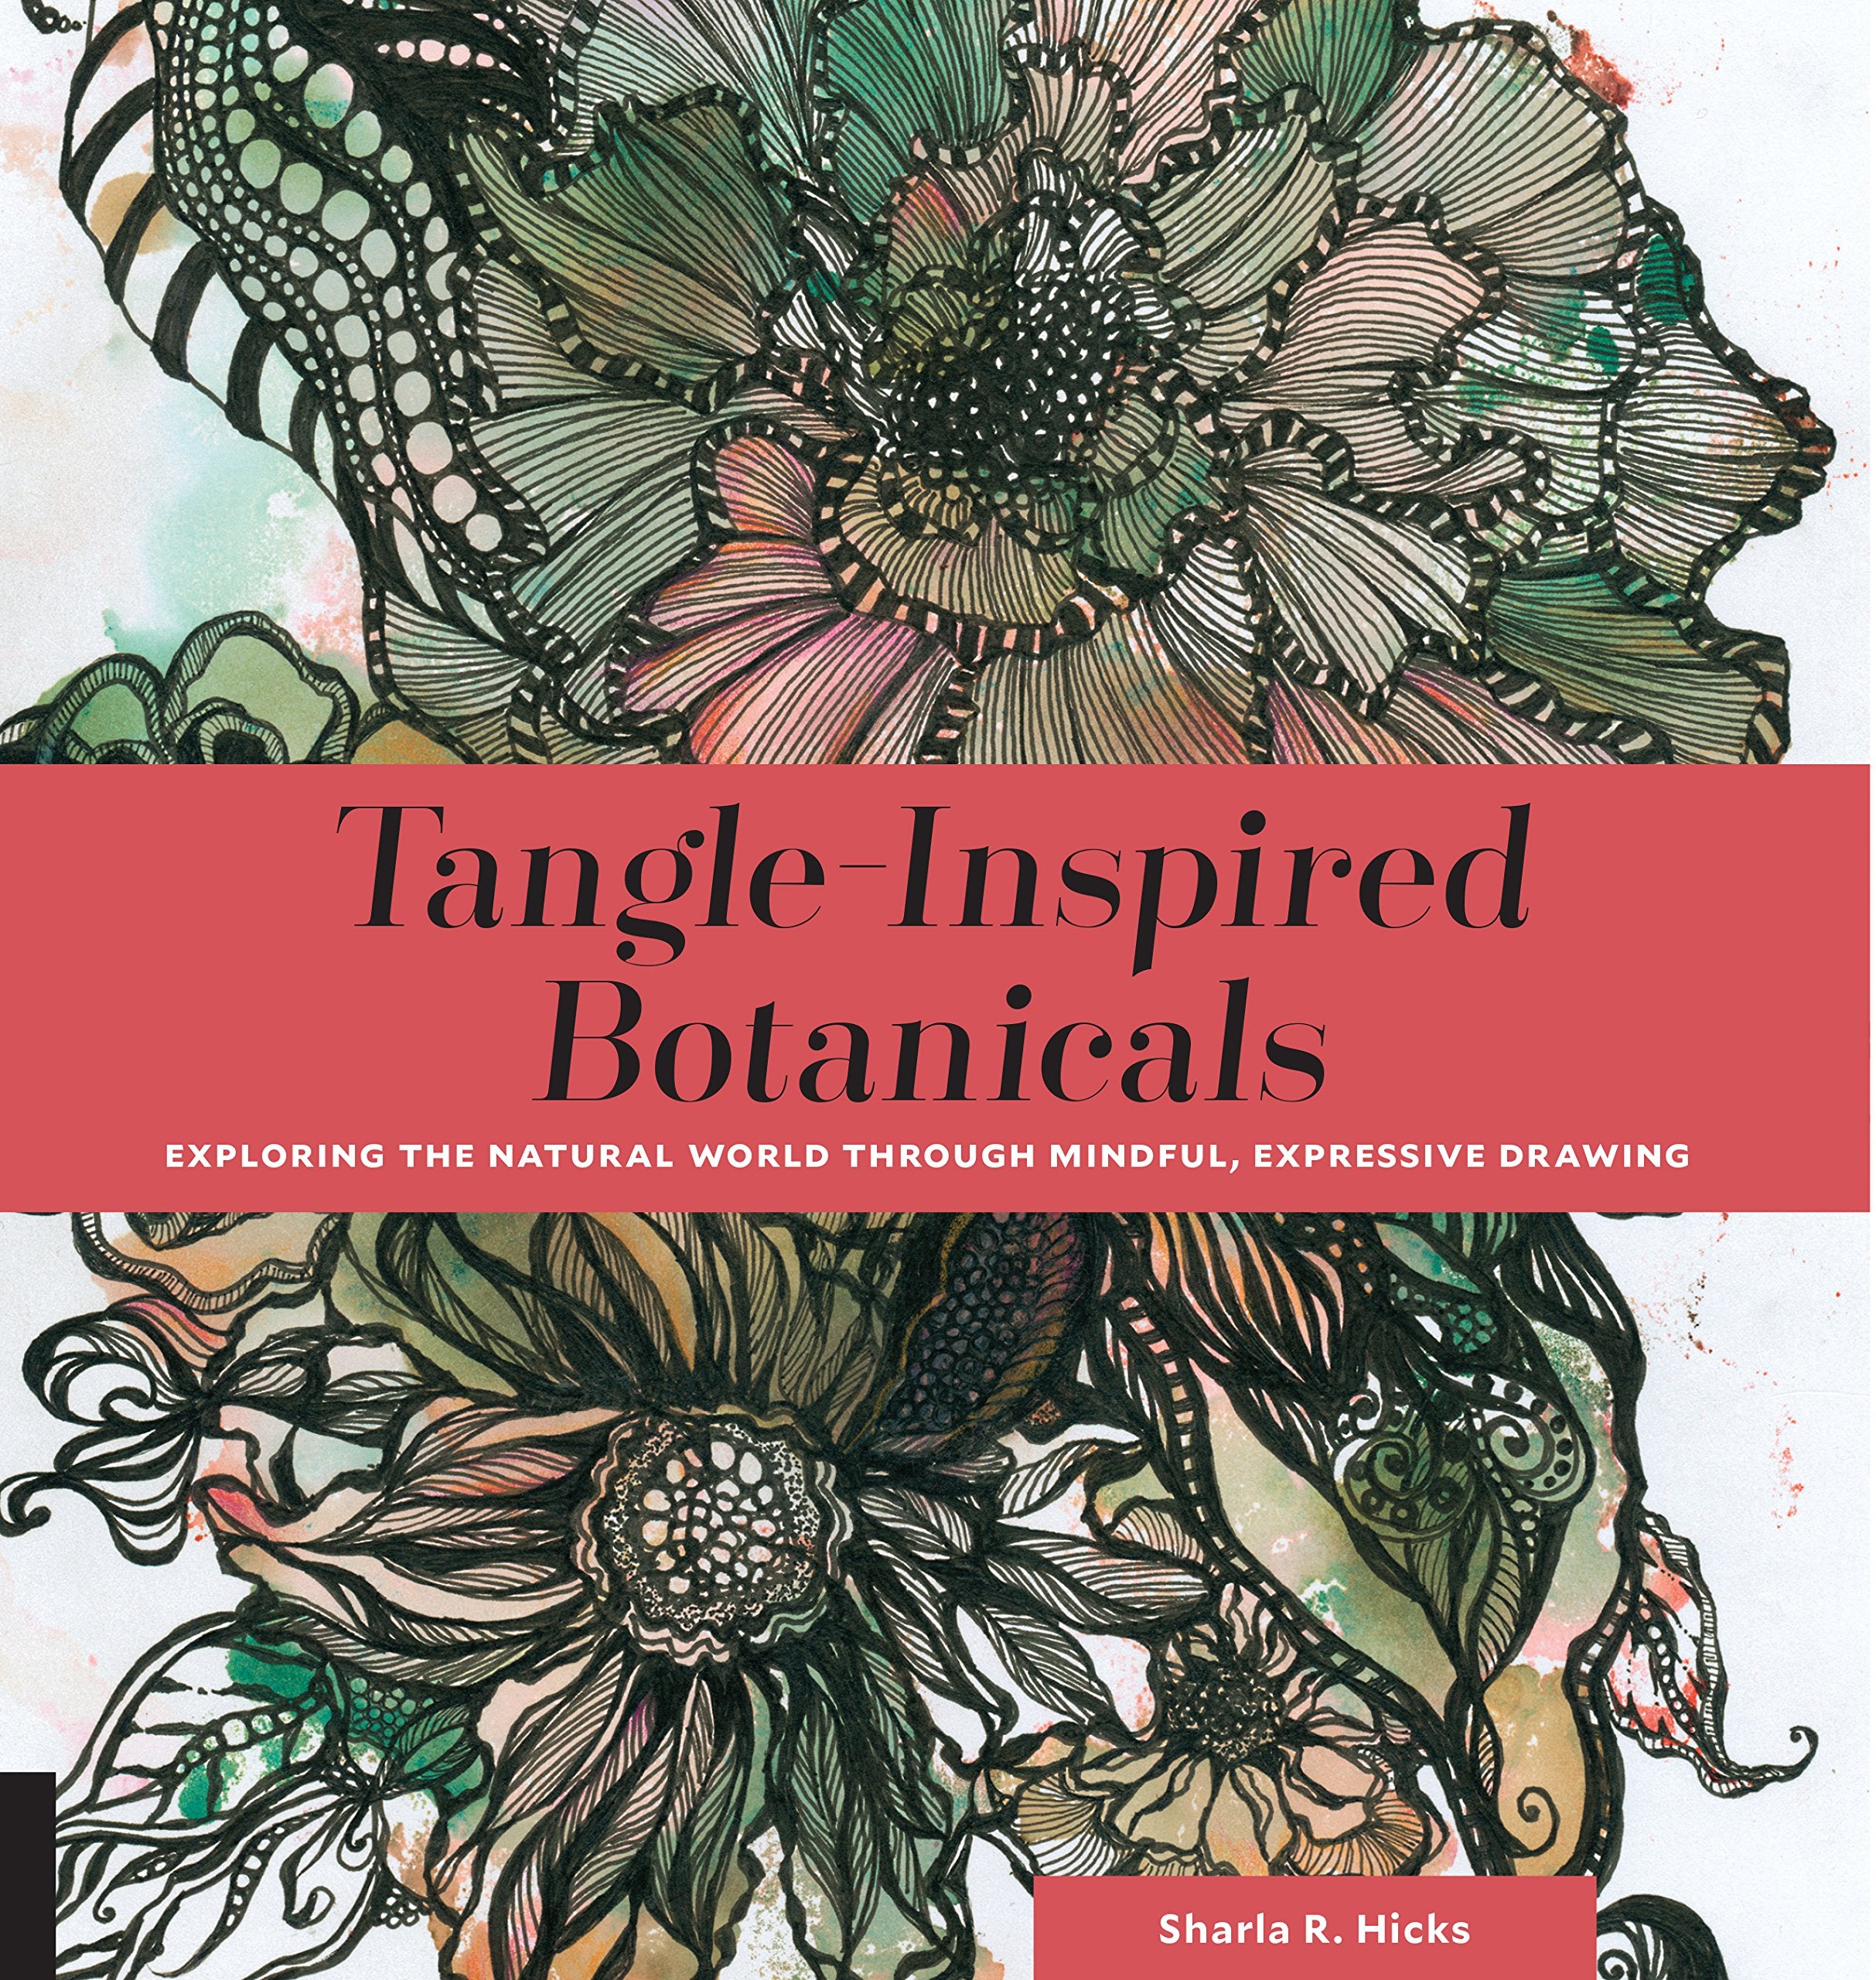 Tangle-IInspired Botanicals by Sharla Hicks